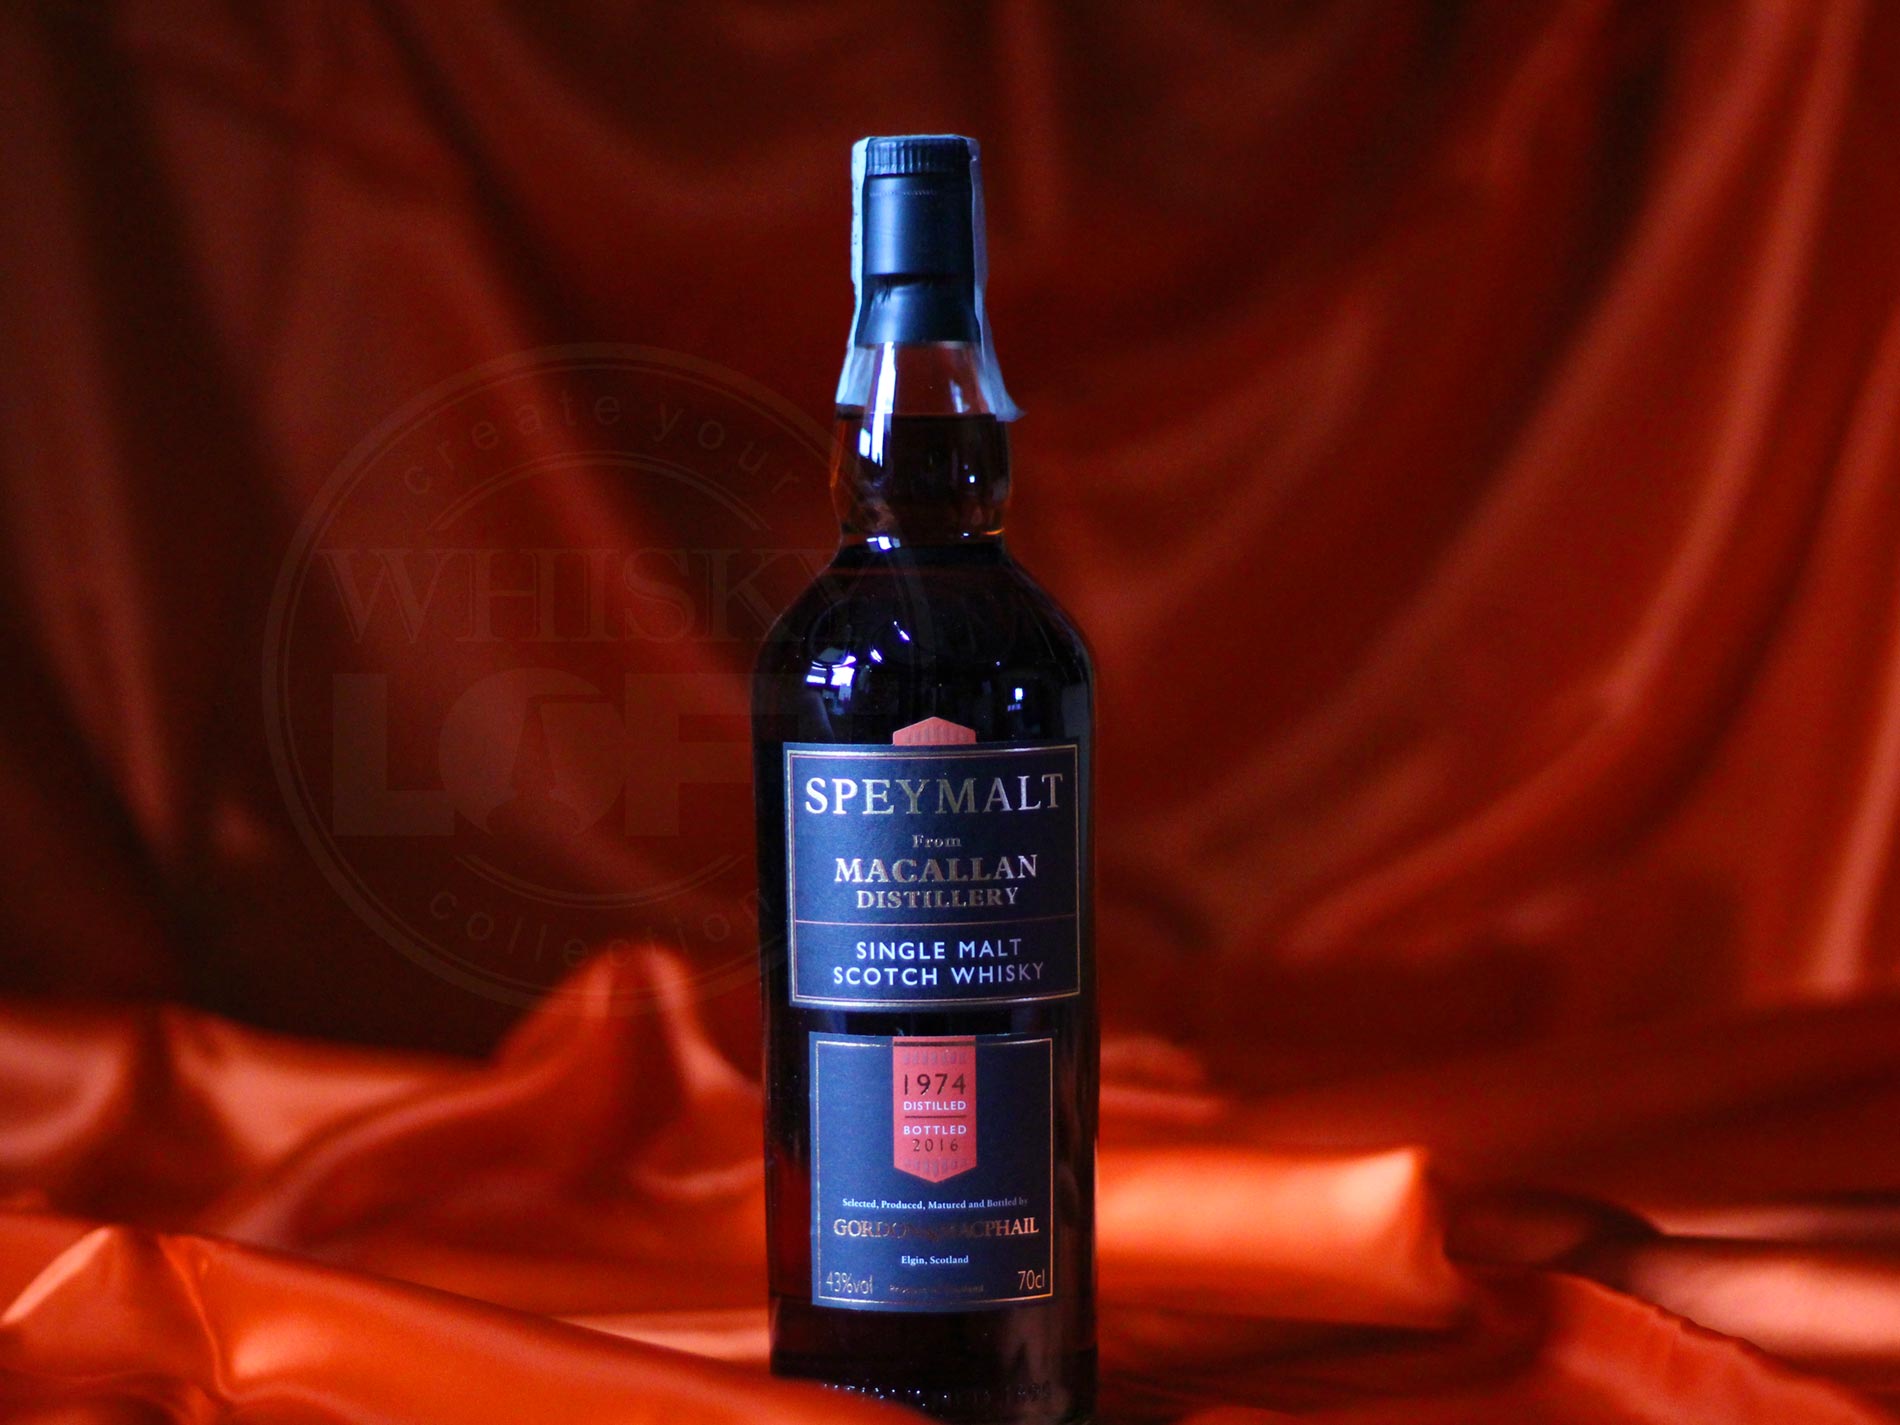 Macallan, Gordon & MacPhail (GM), Single Malt Scotch Whisky, 1974 distilled.